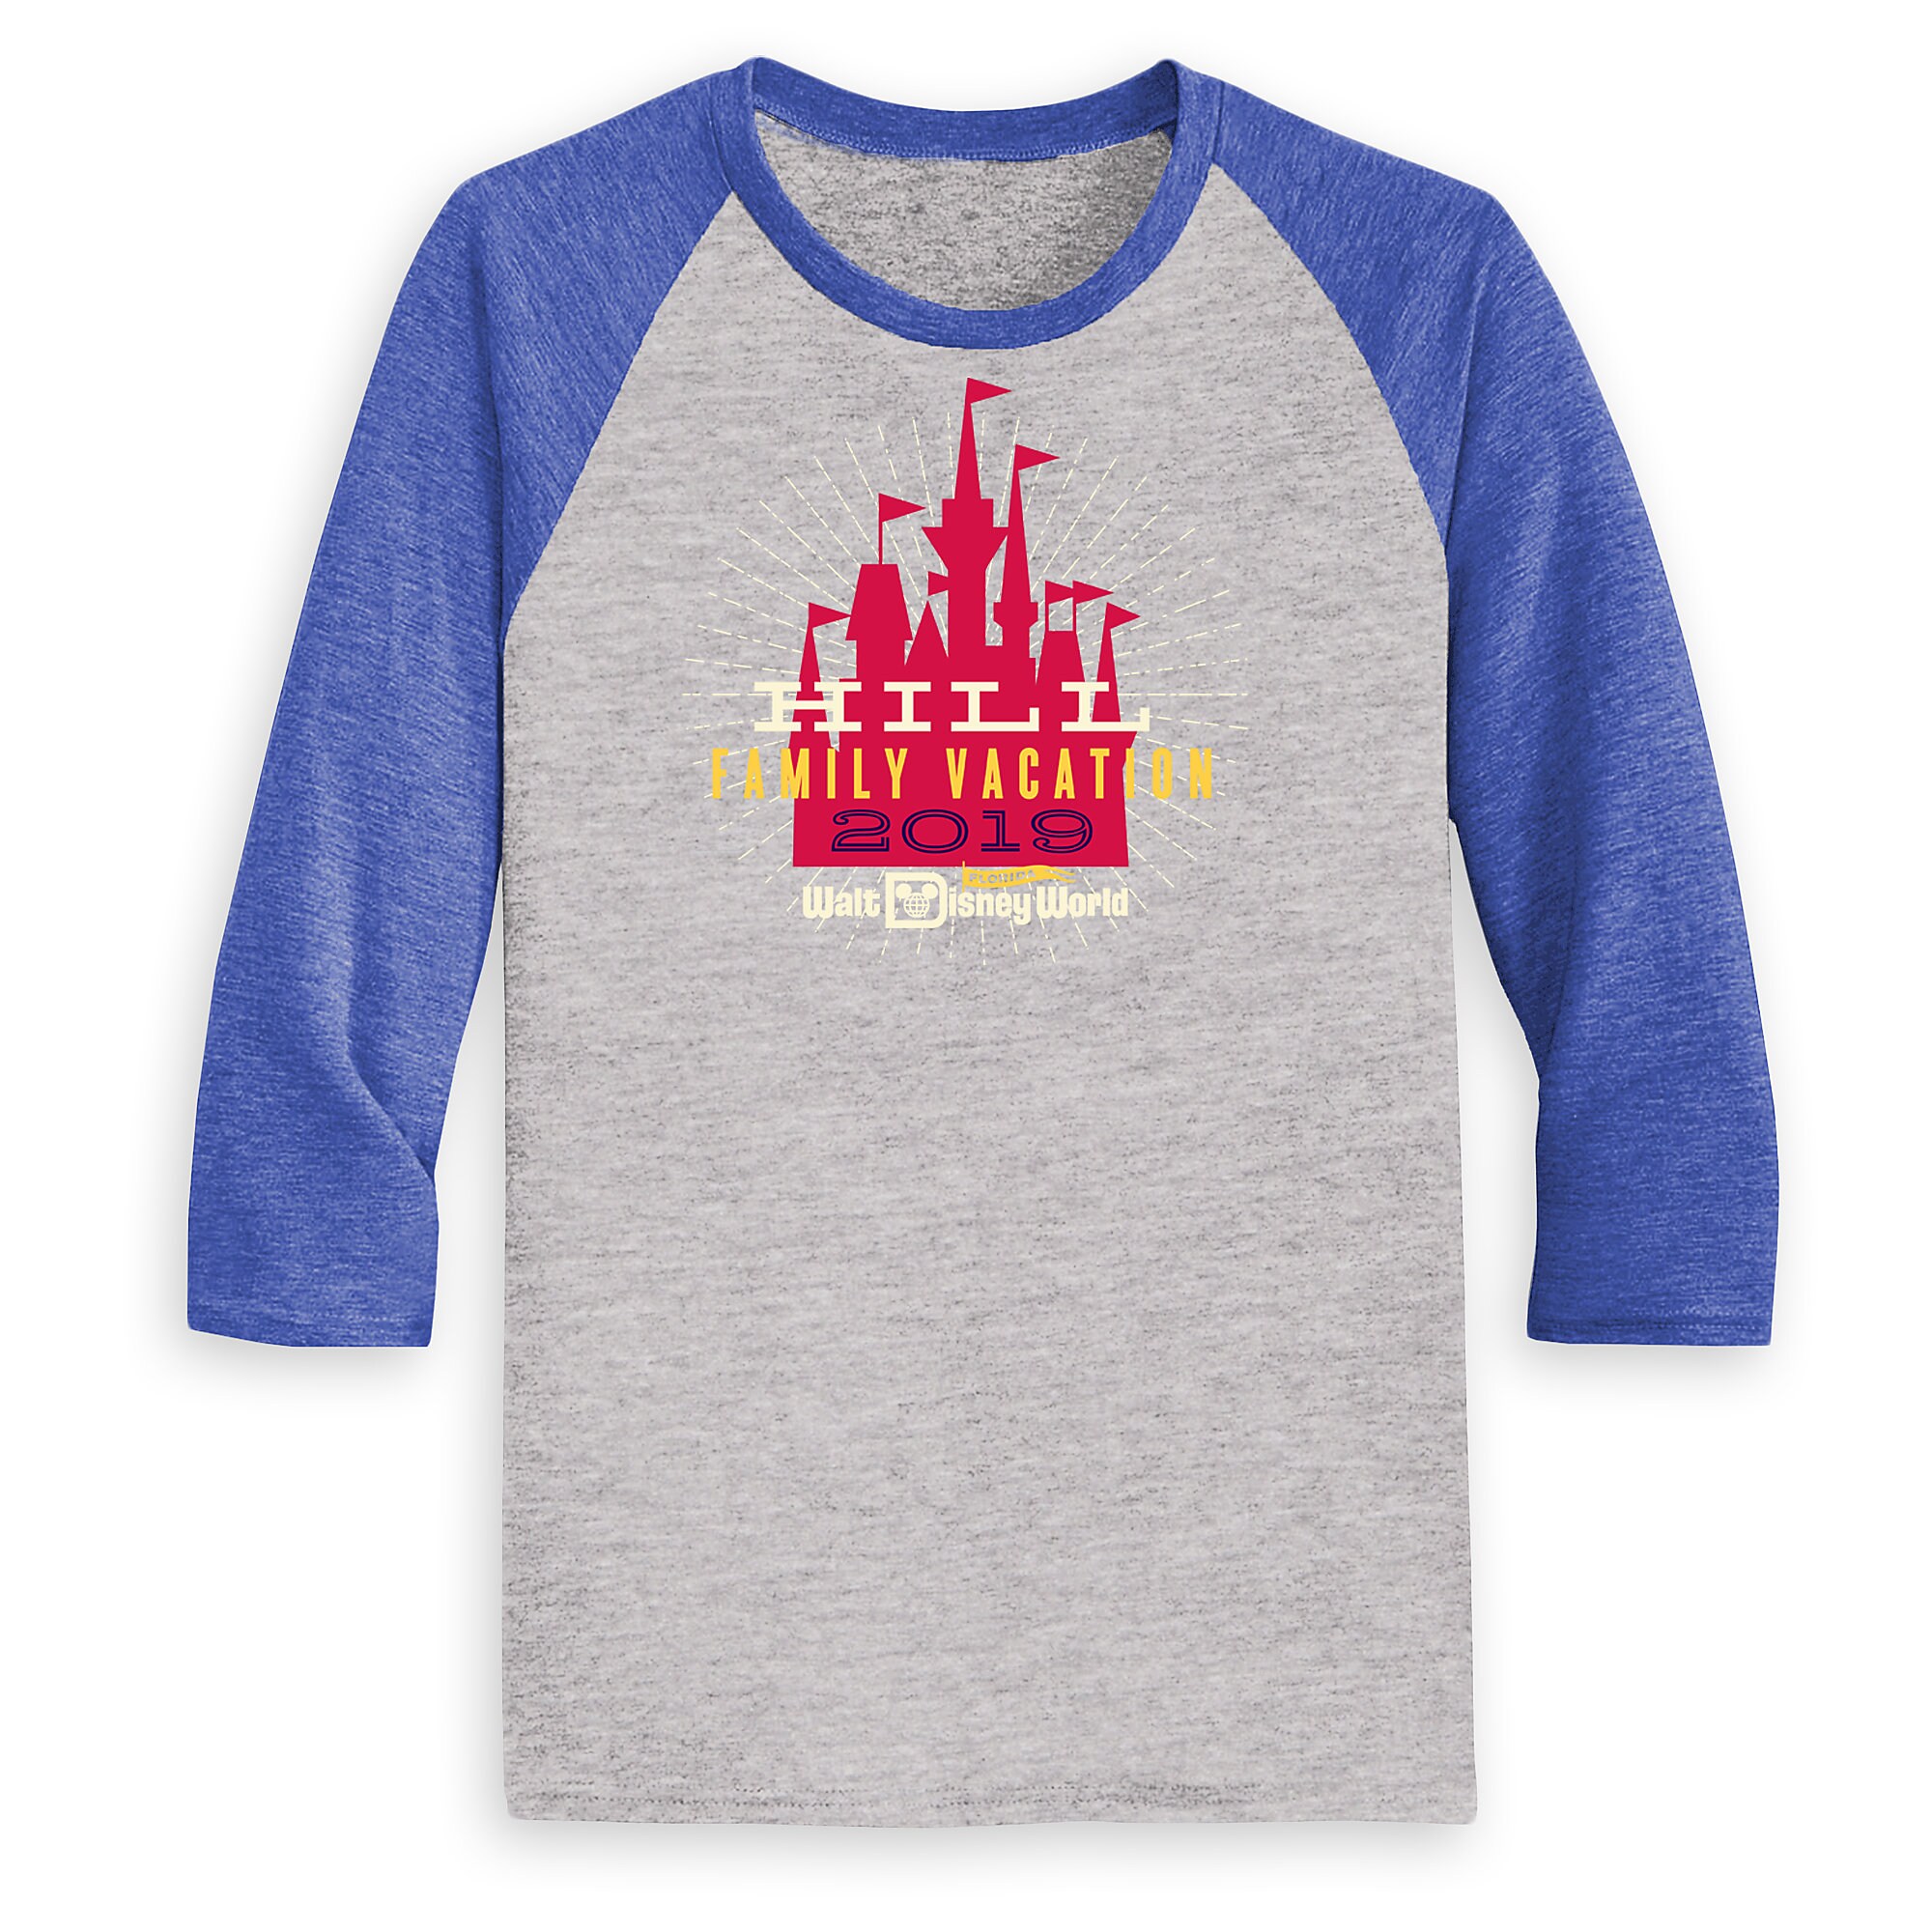 Men's Cinderella Castle Family Vacation Raglan Shirt - Walt Disney World - 2019 - Customized